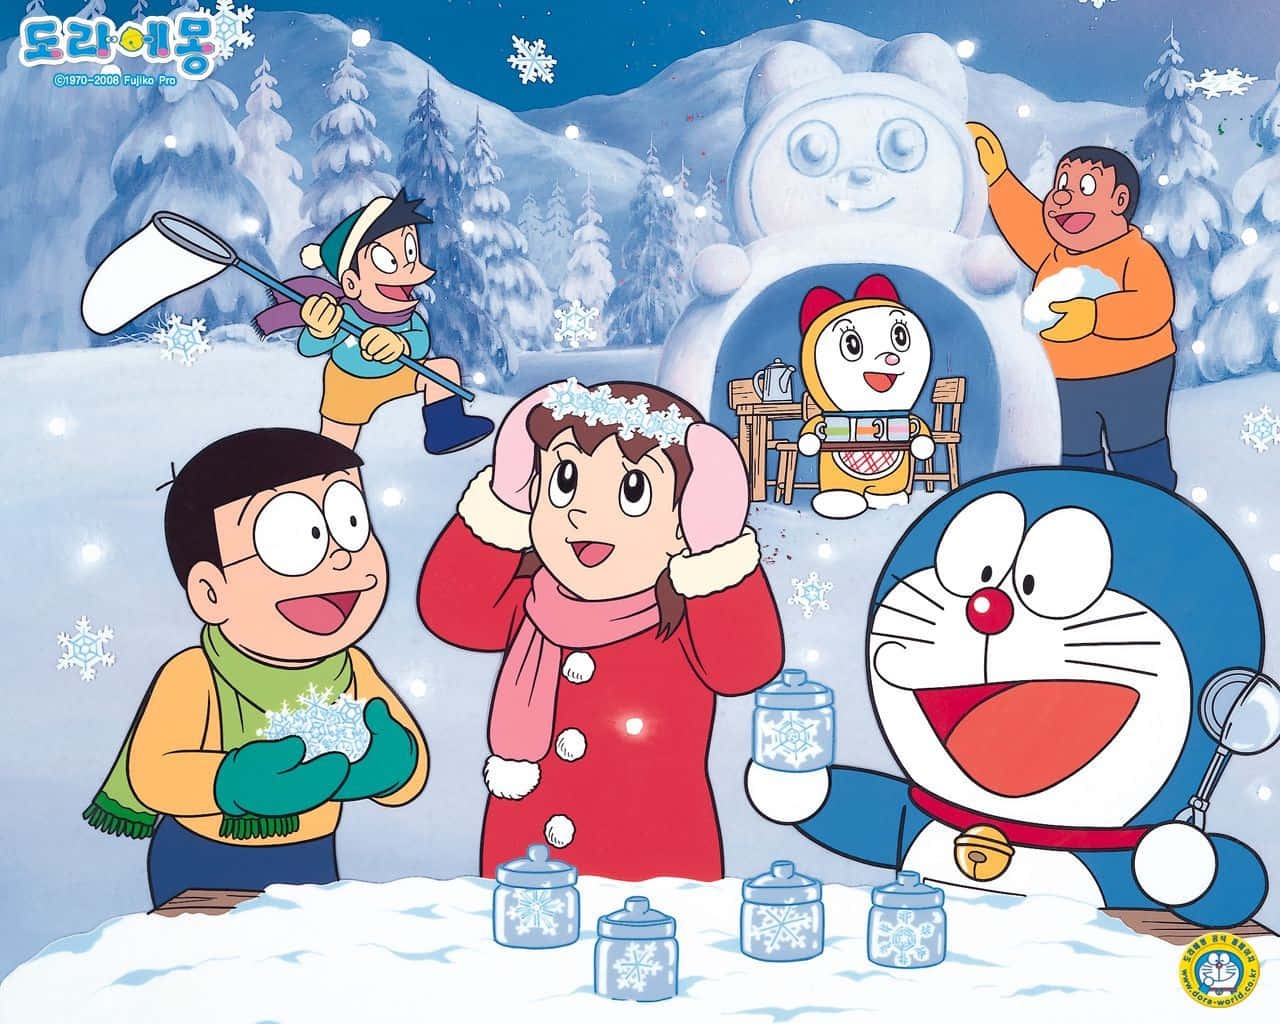 Doraemonbaggrundsbillede